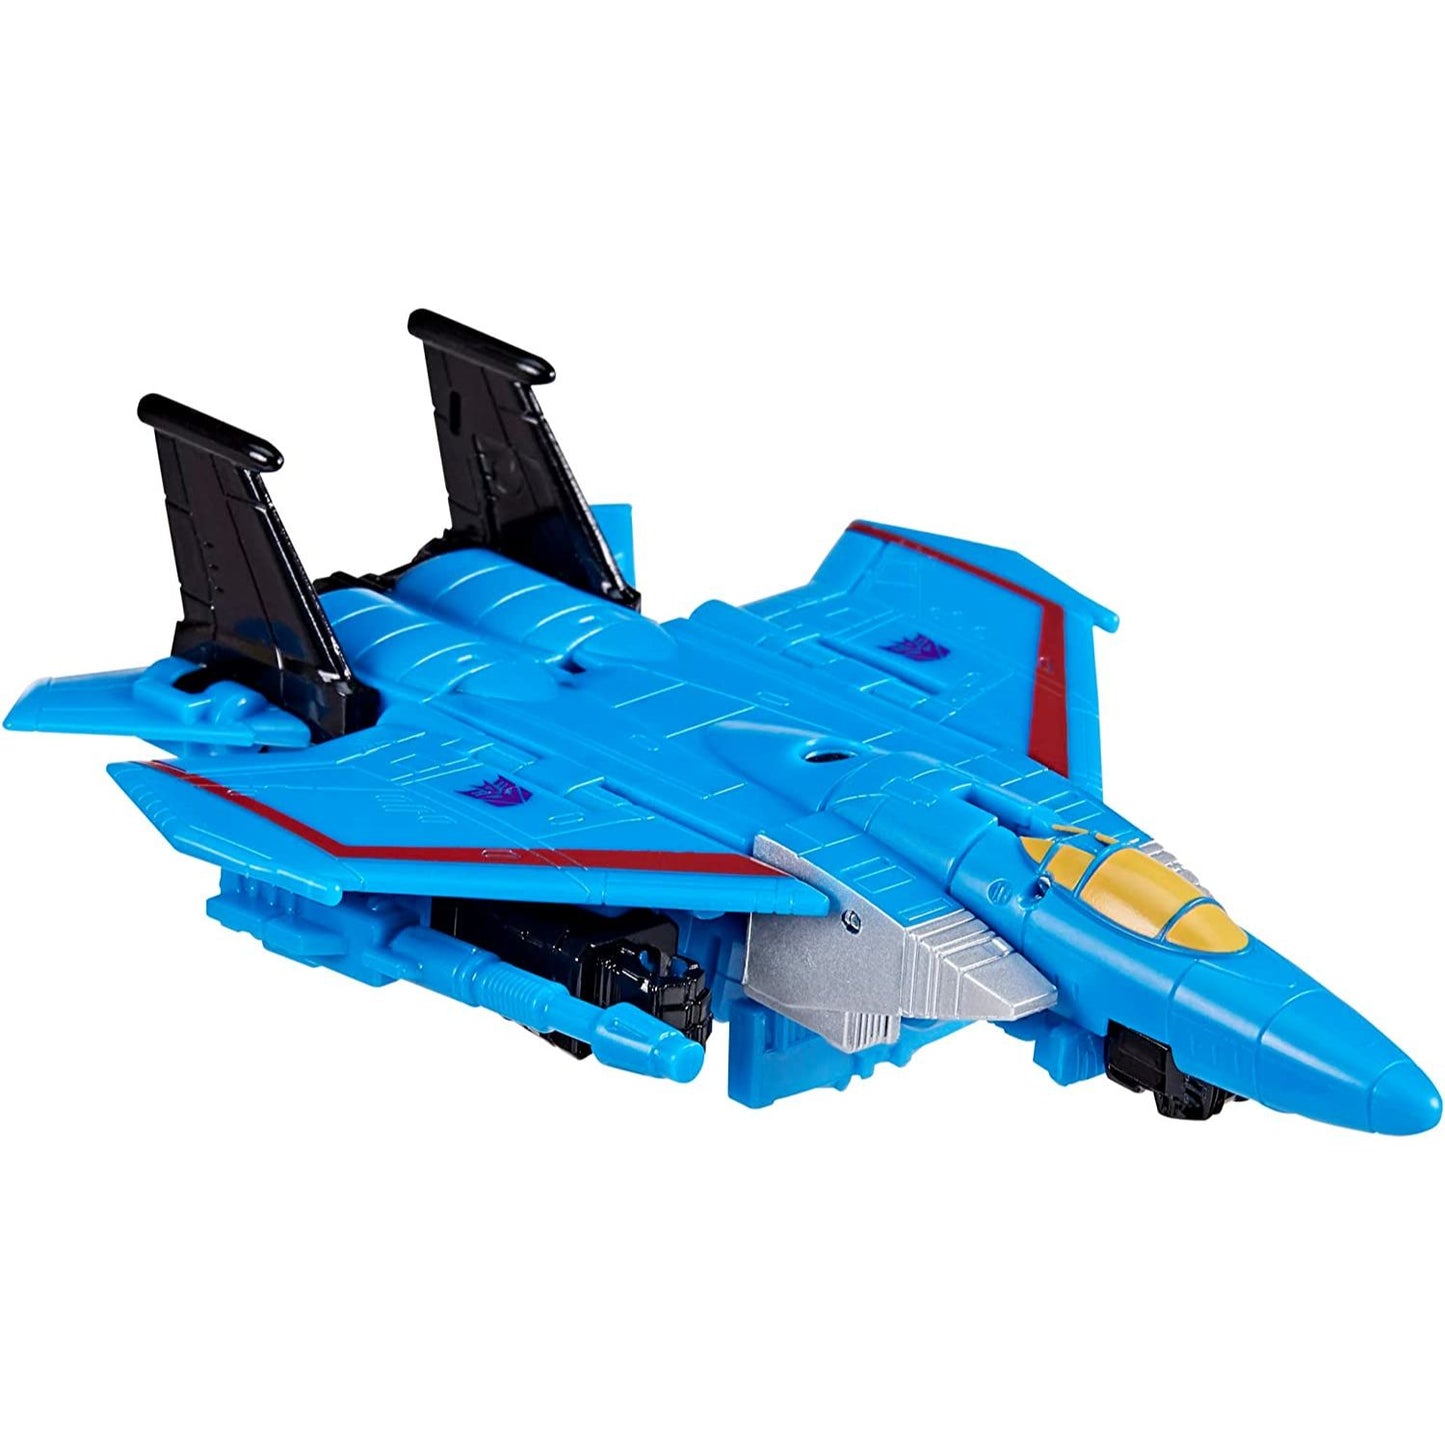 Transformers Generations Legacy Evolution Core Thundercracker Action Figure Toy